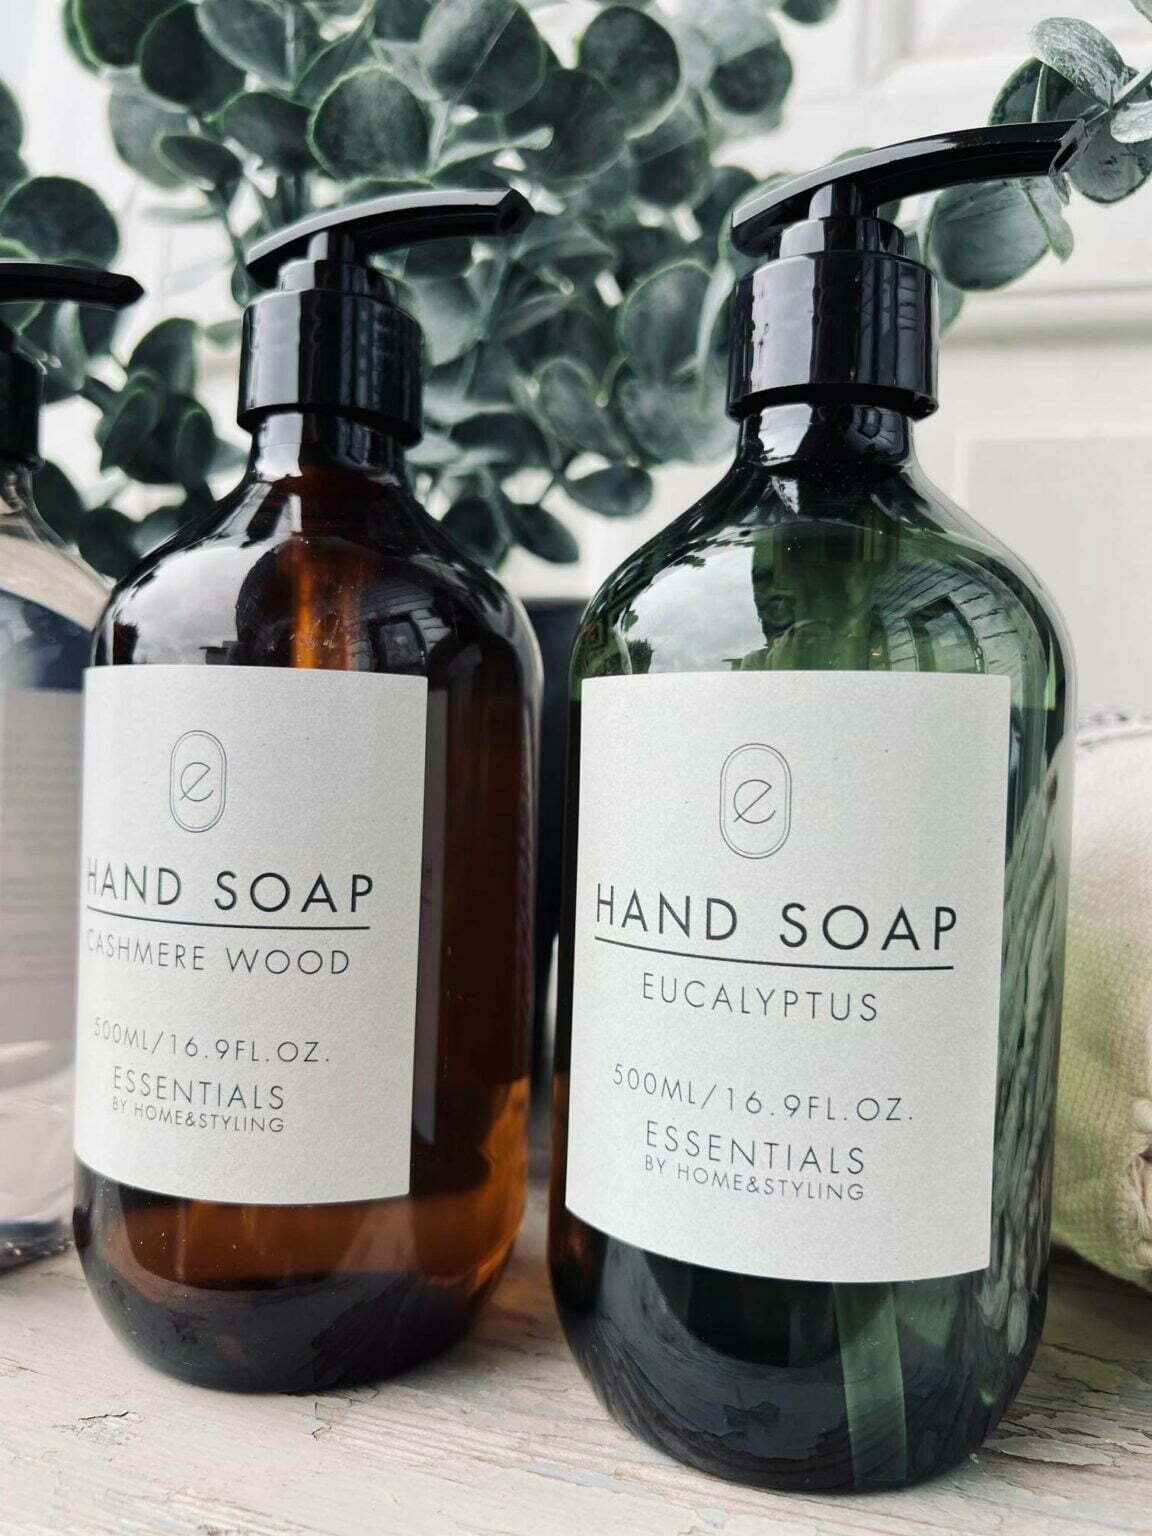 Hand Soap - "Eucalyptus" - 500ml